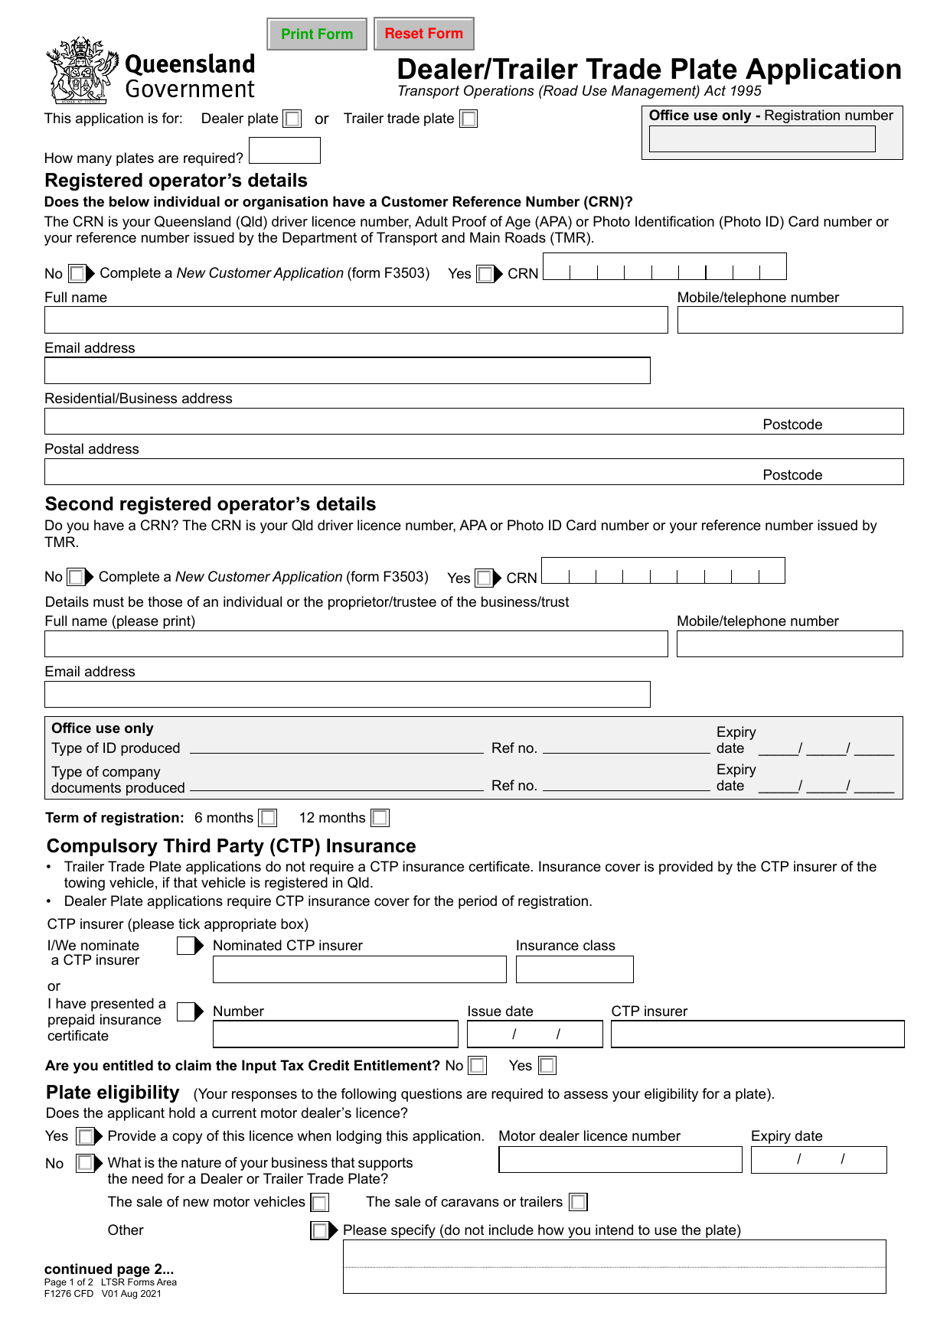 Form F1276 Dealer/Trailer Trade Plate Application - Queensland, Australia, Page 1